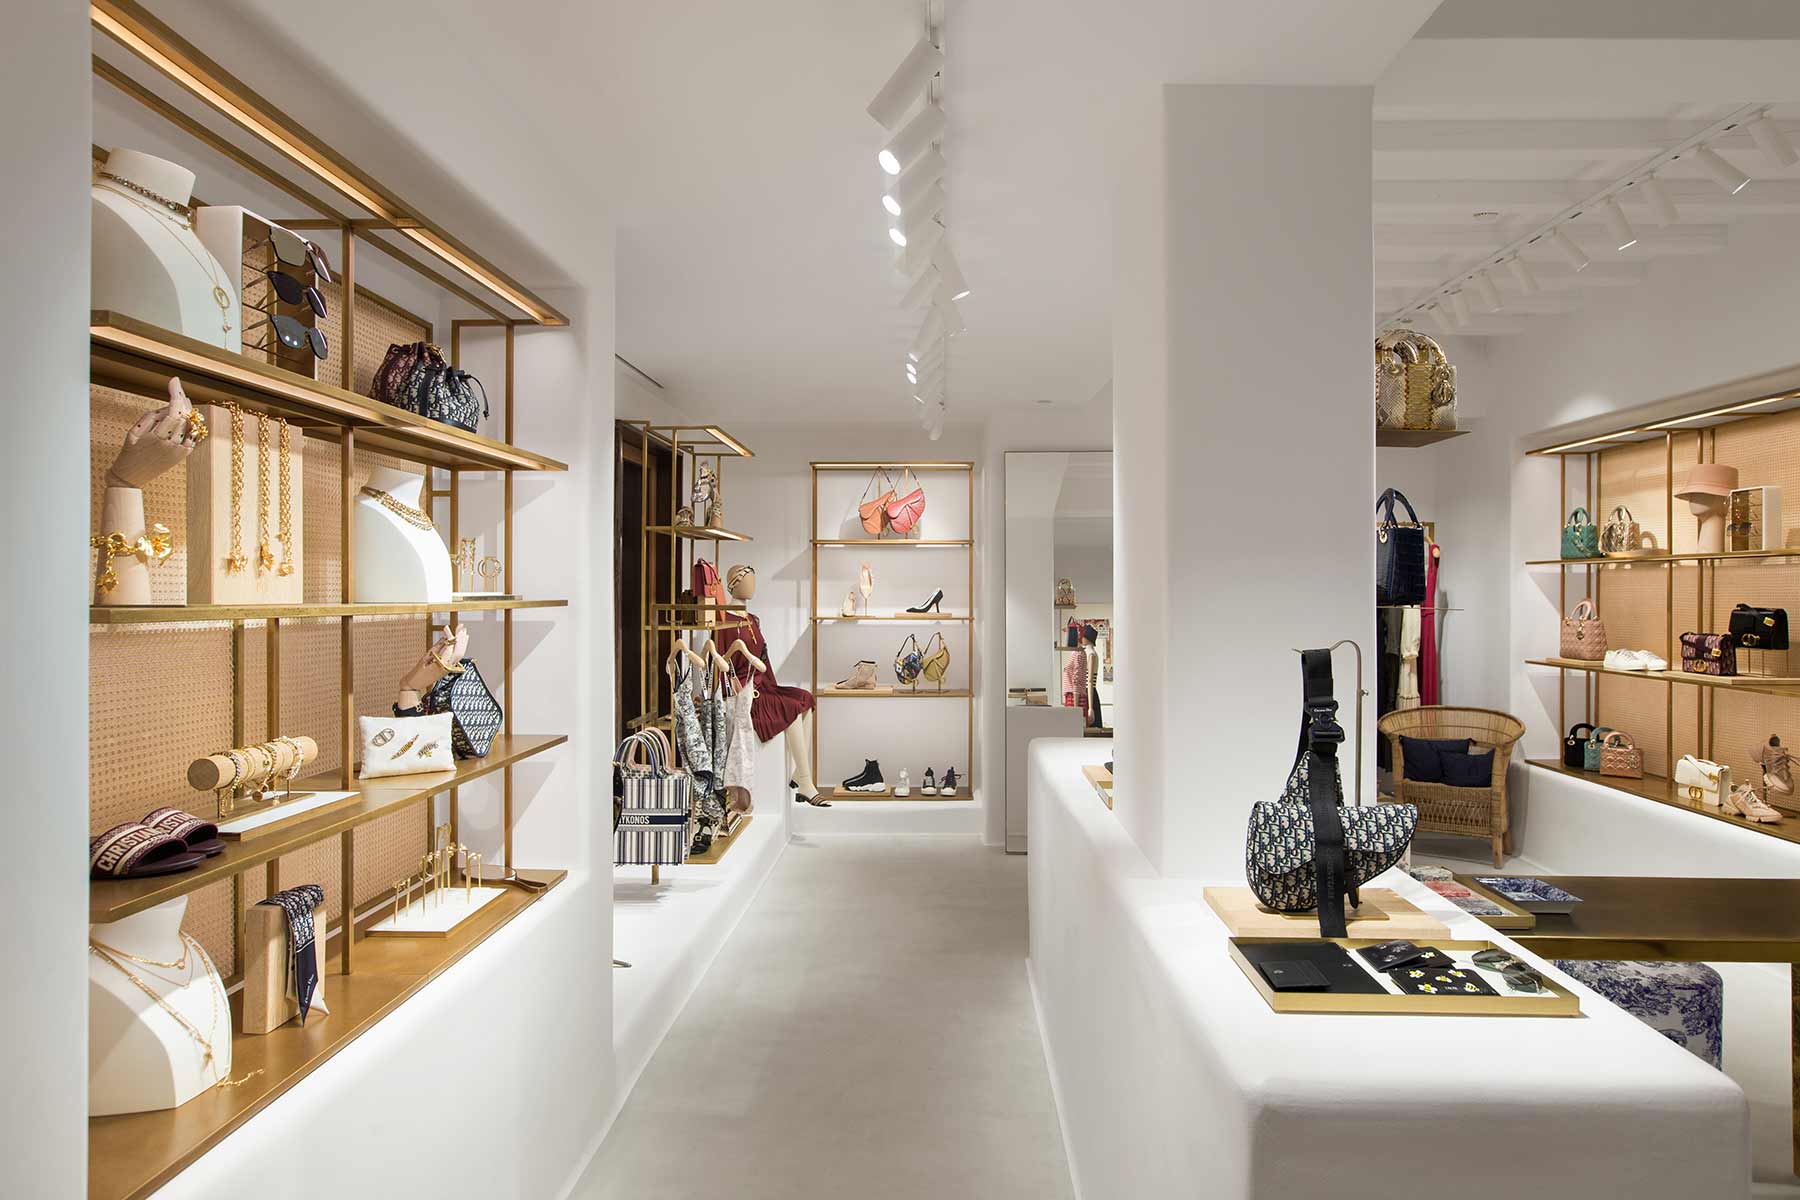 Dior Opens Pop-Up Boutique In Mykonos, Greece